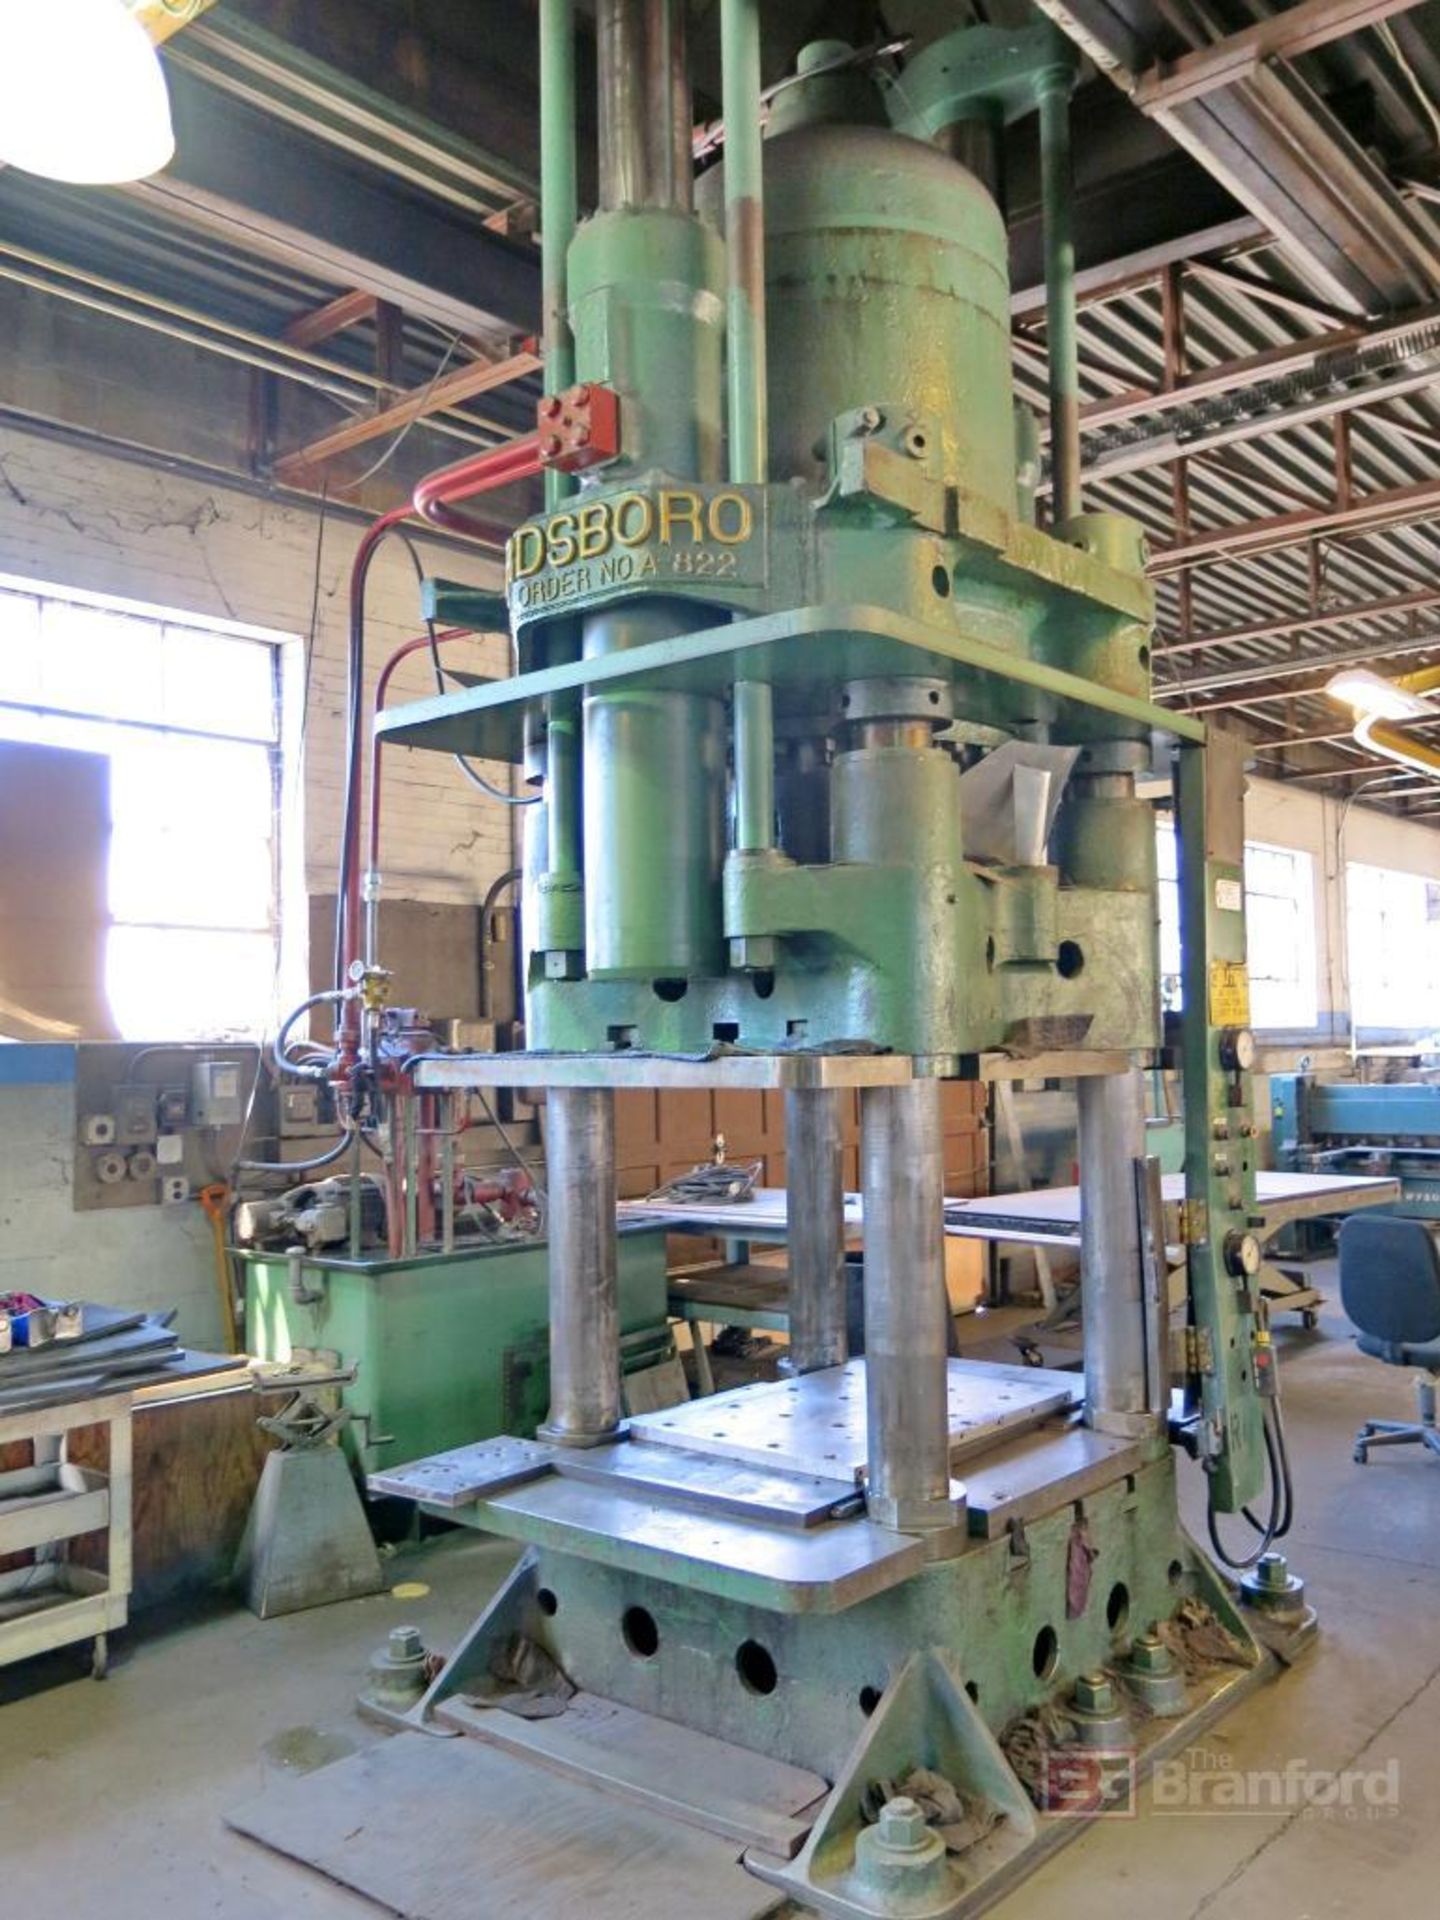 Birdsboro model A-822, approx. 1500 ton 4-posted hydraulic press